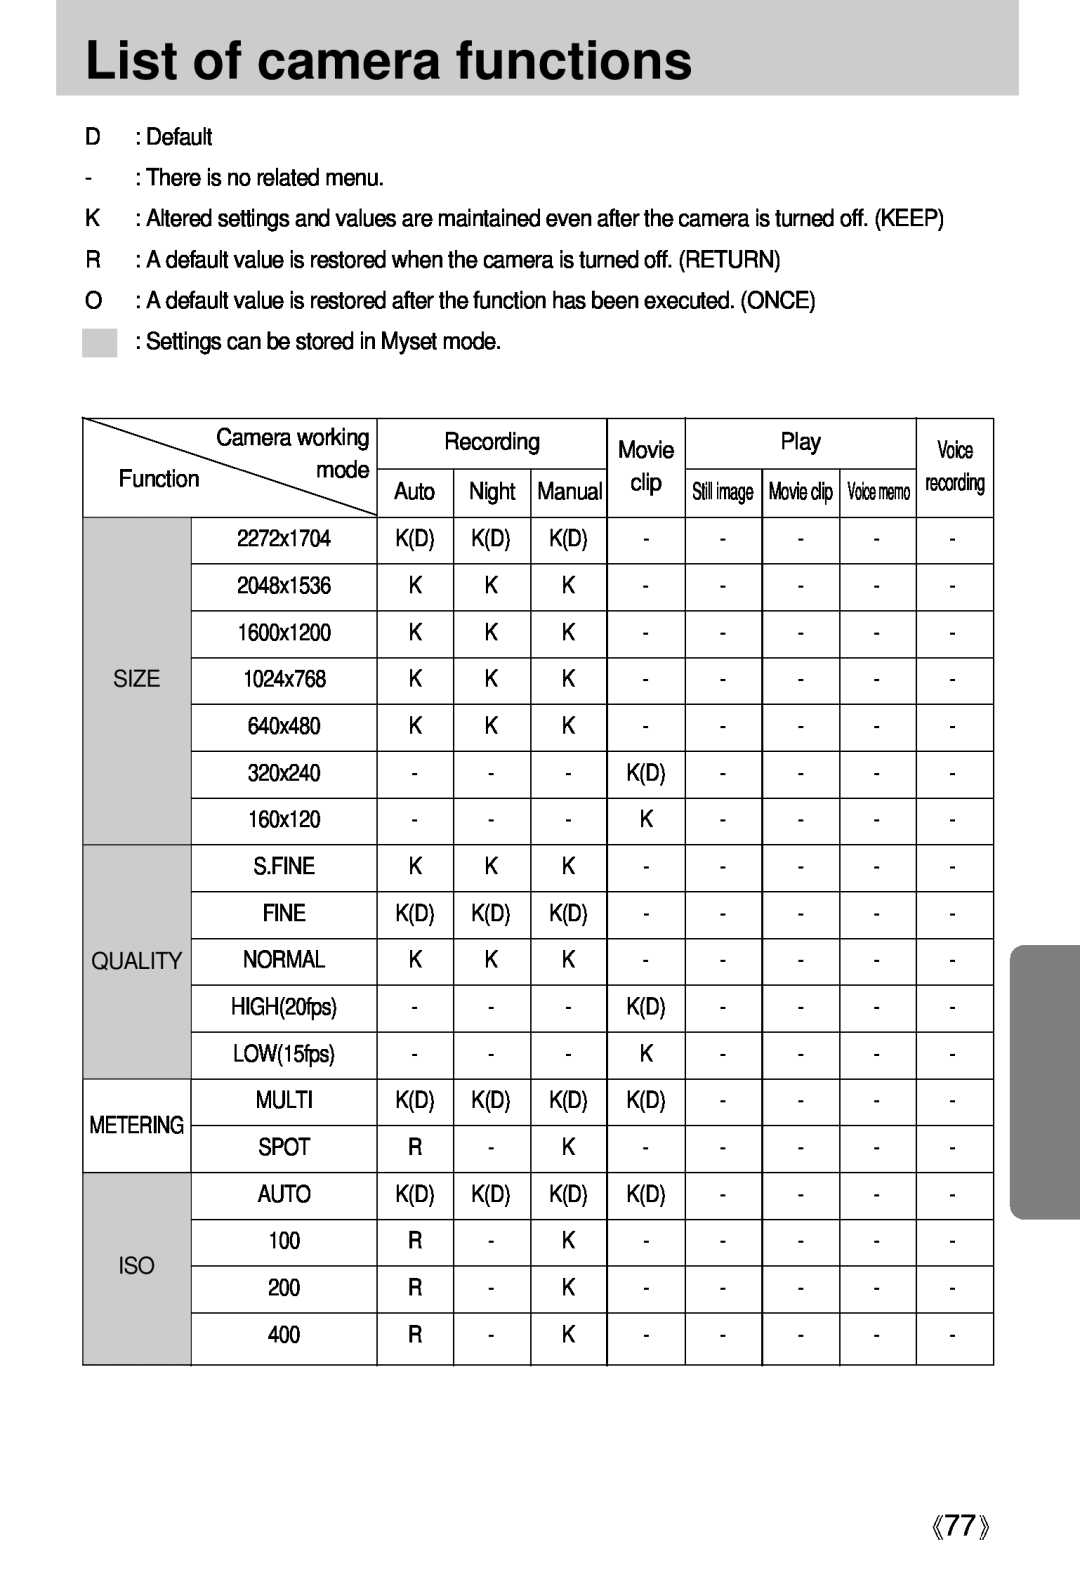 Samsung Digimax U-CA user manual List of camera functions, Voice, recording, Still image, Movie clip 